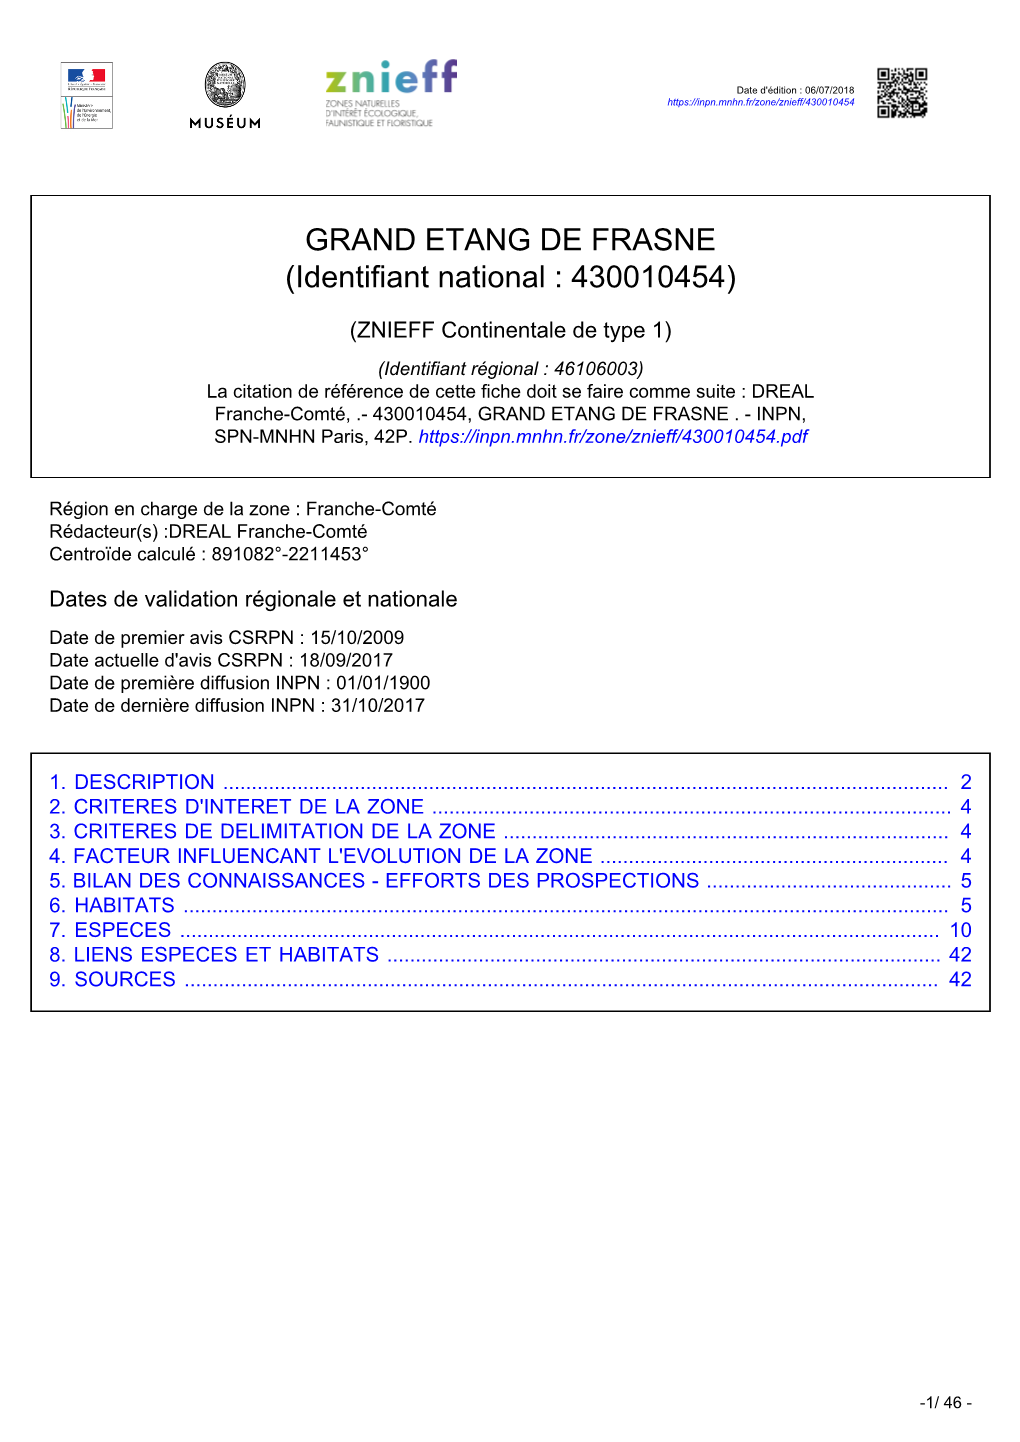 GRAND ETANG DE FRASNE (Identifiant National : 430010454)